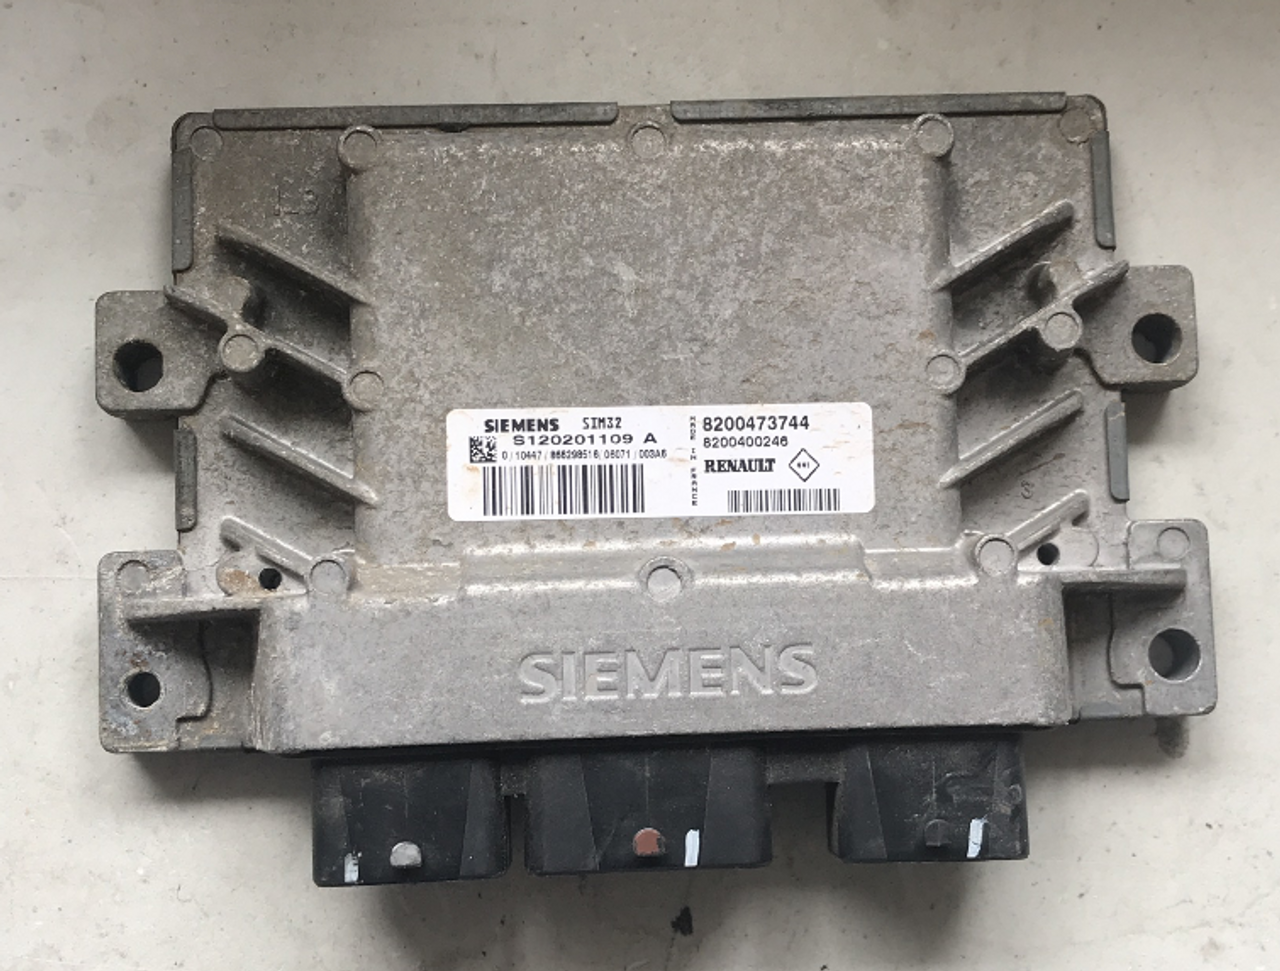 Siemens, SIM32, S120201109A, 8200473744, 8200400246